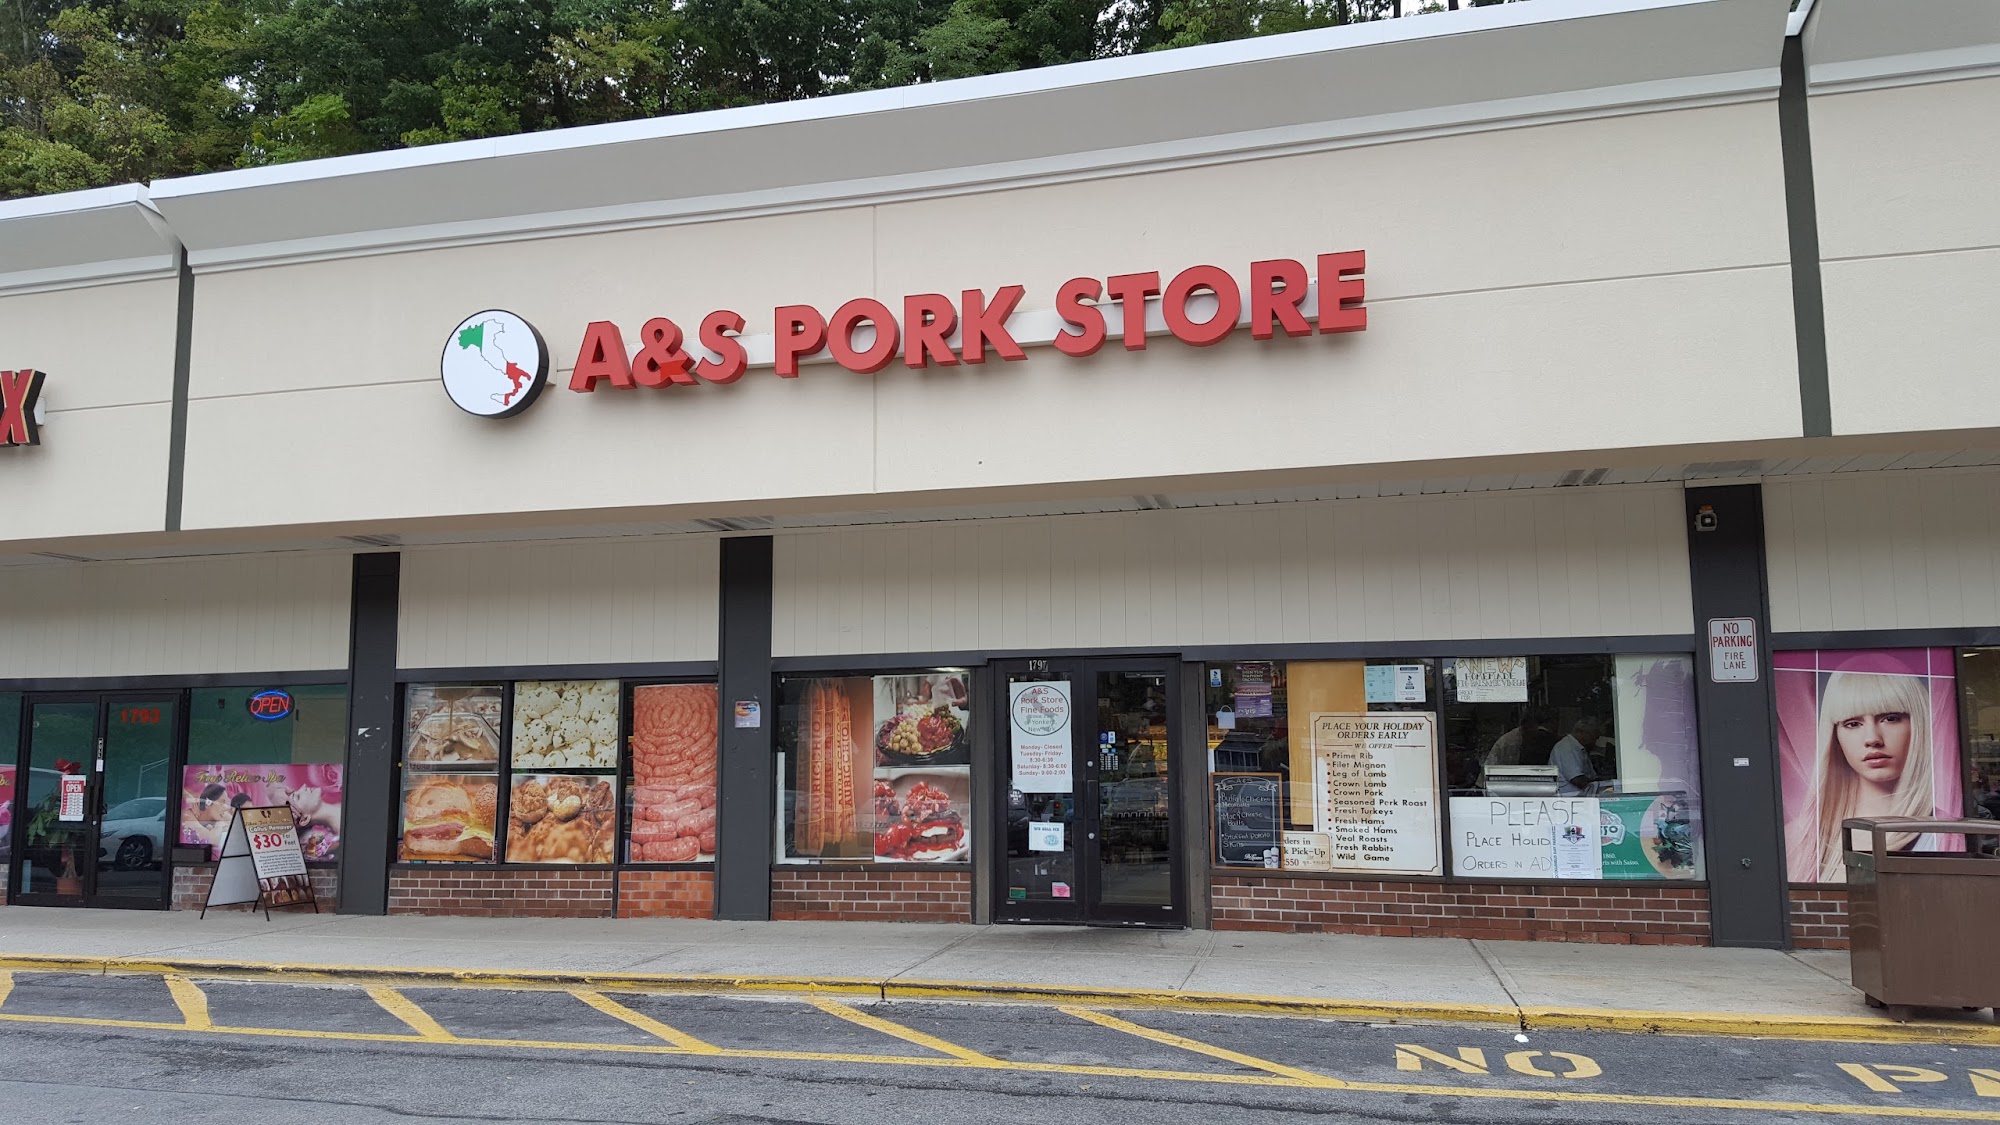 A&S Italian Pork Store